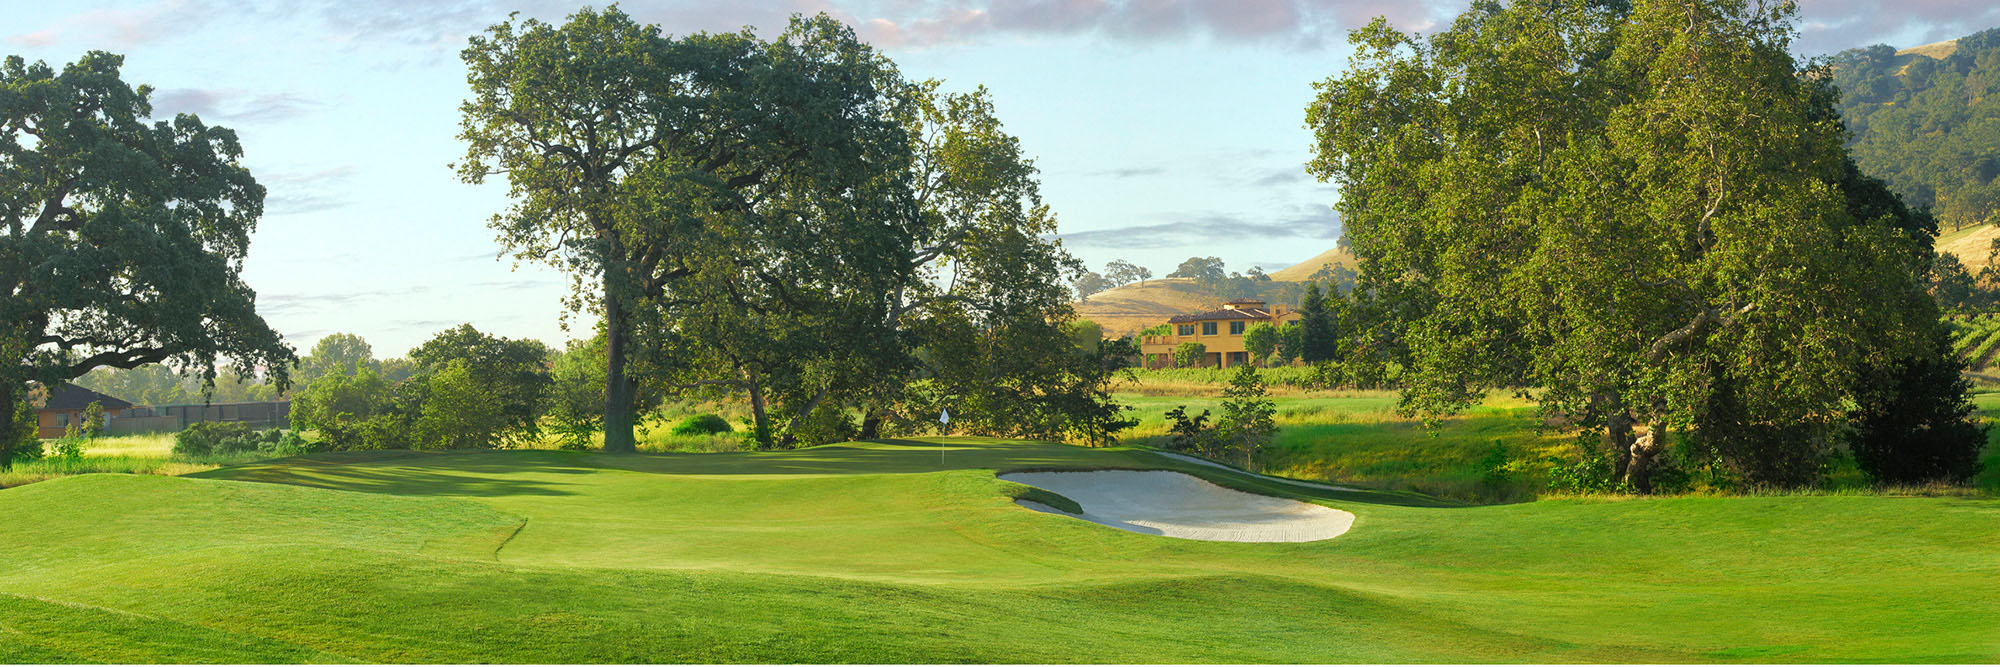 Golf Course Image - CordeValle Golf Club No. 2